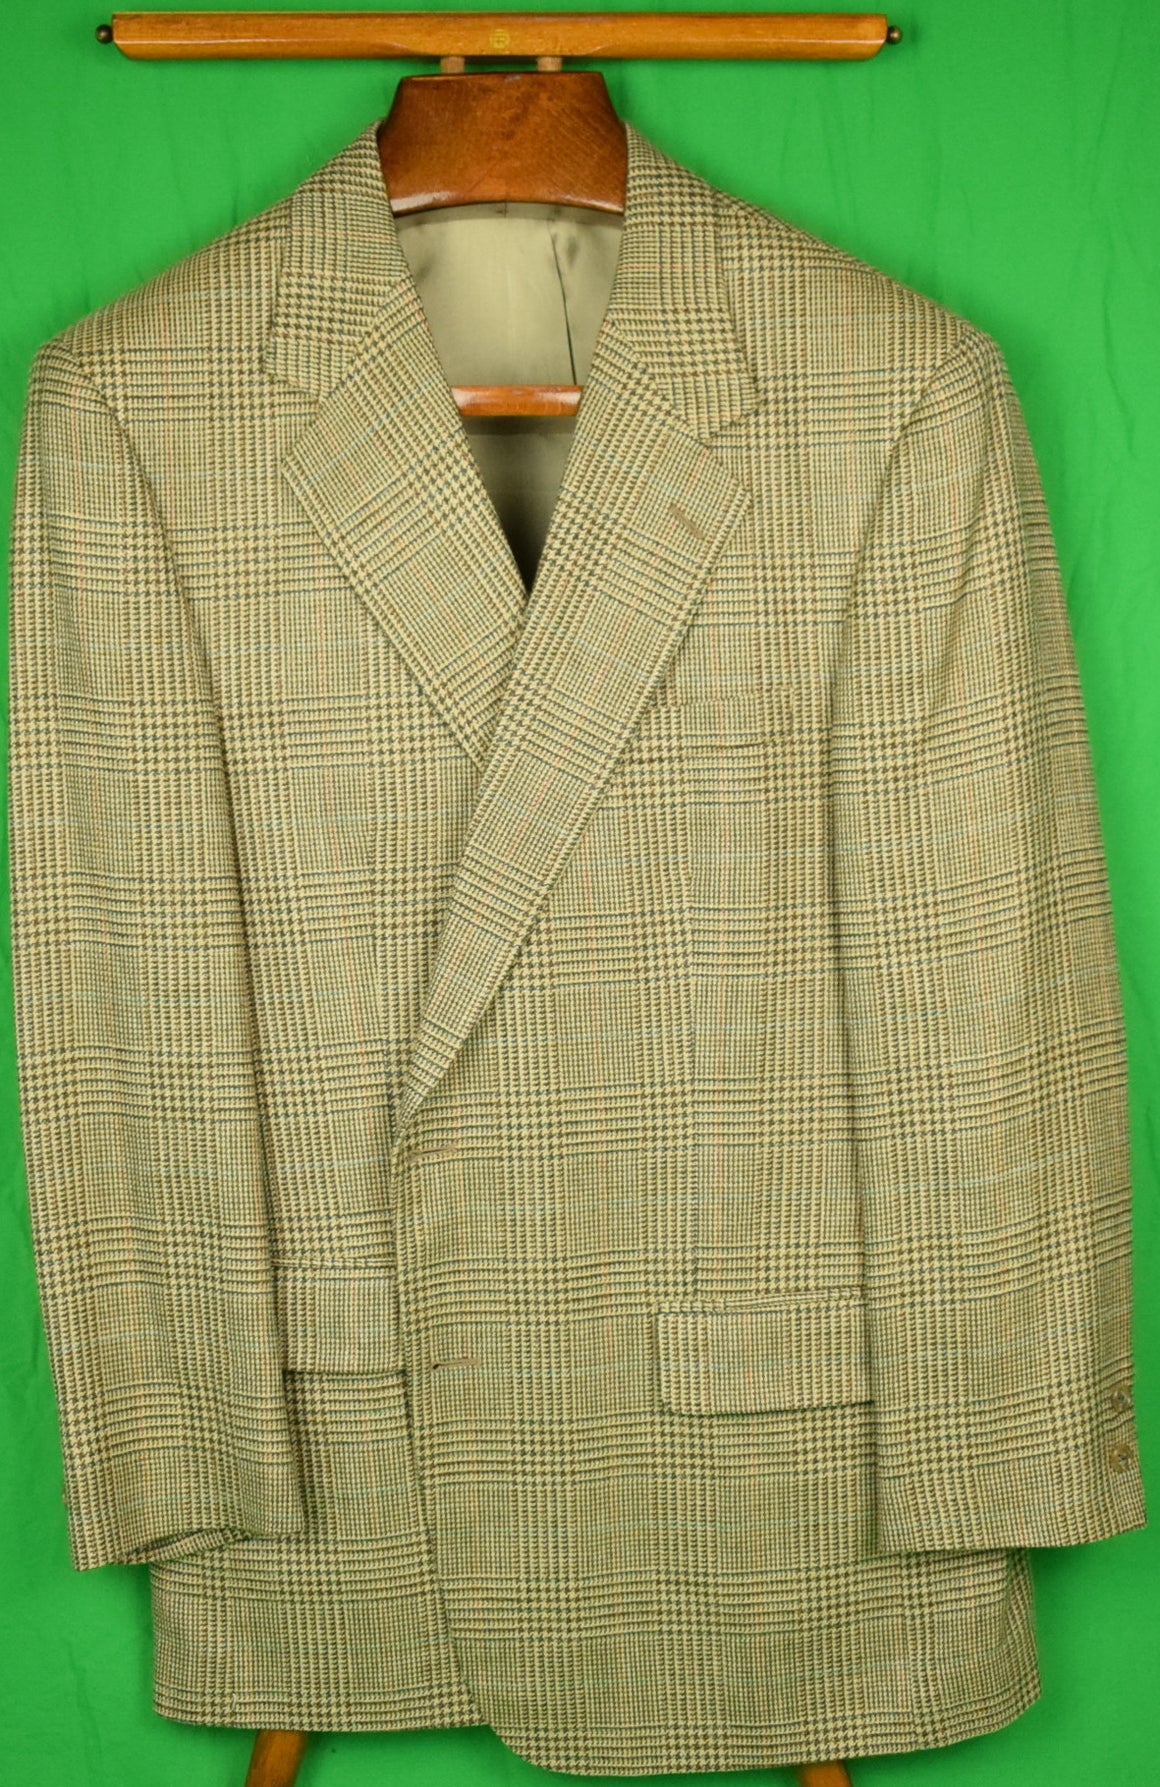 "Brooks Brothers Silk/ Linen Glen Plaid Sport Jacket" Sz 42R (SOLD)